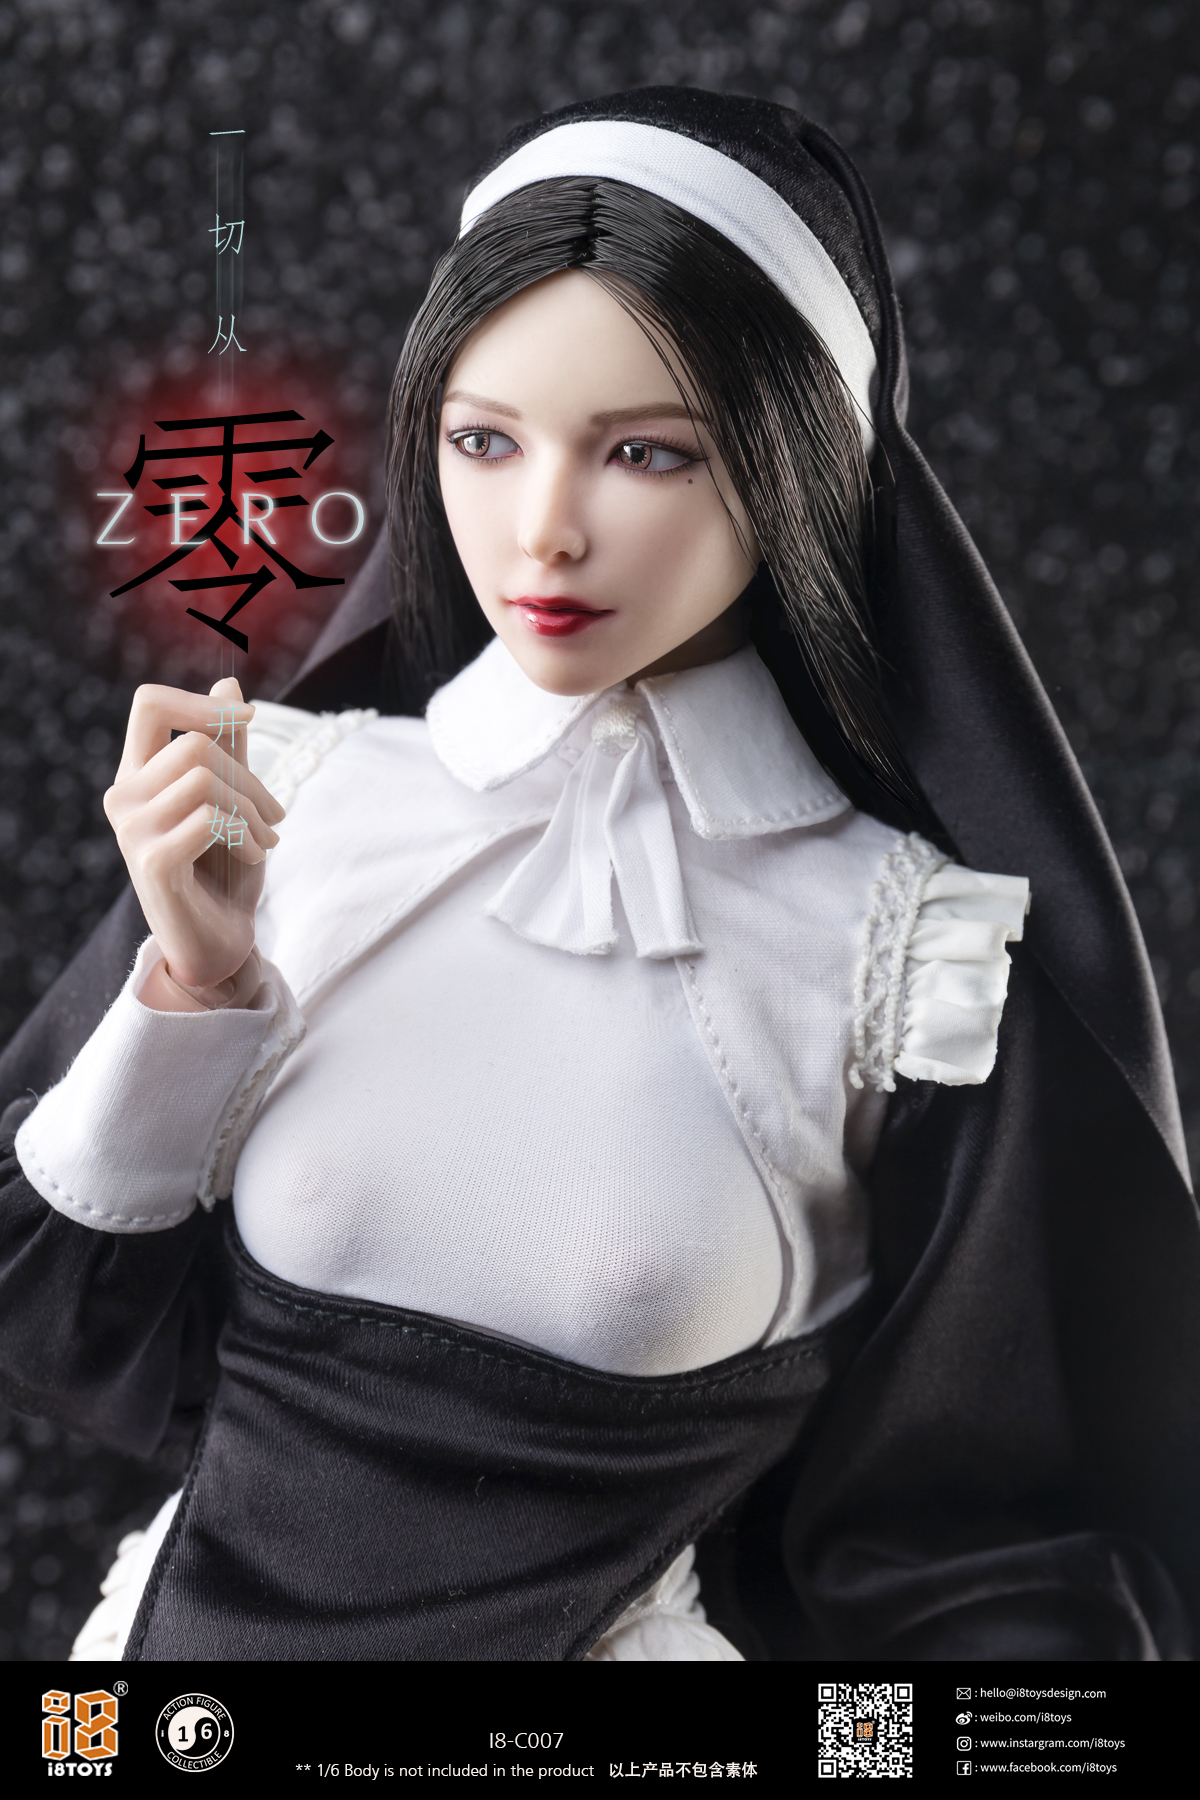 I8-C007 - I8Toys 1/6 Zero (The Nun) Collectible Costume Set - NovelToys  Collectible